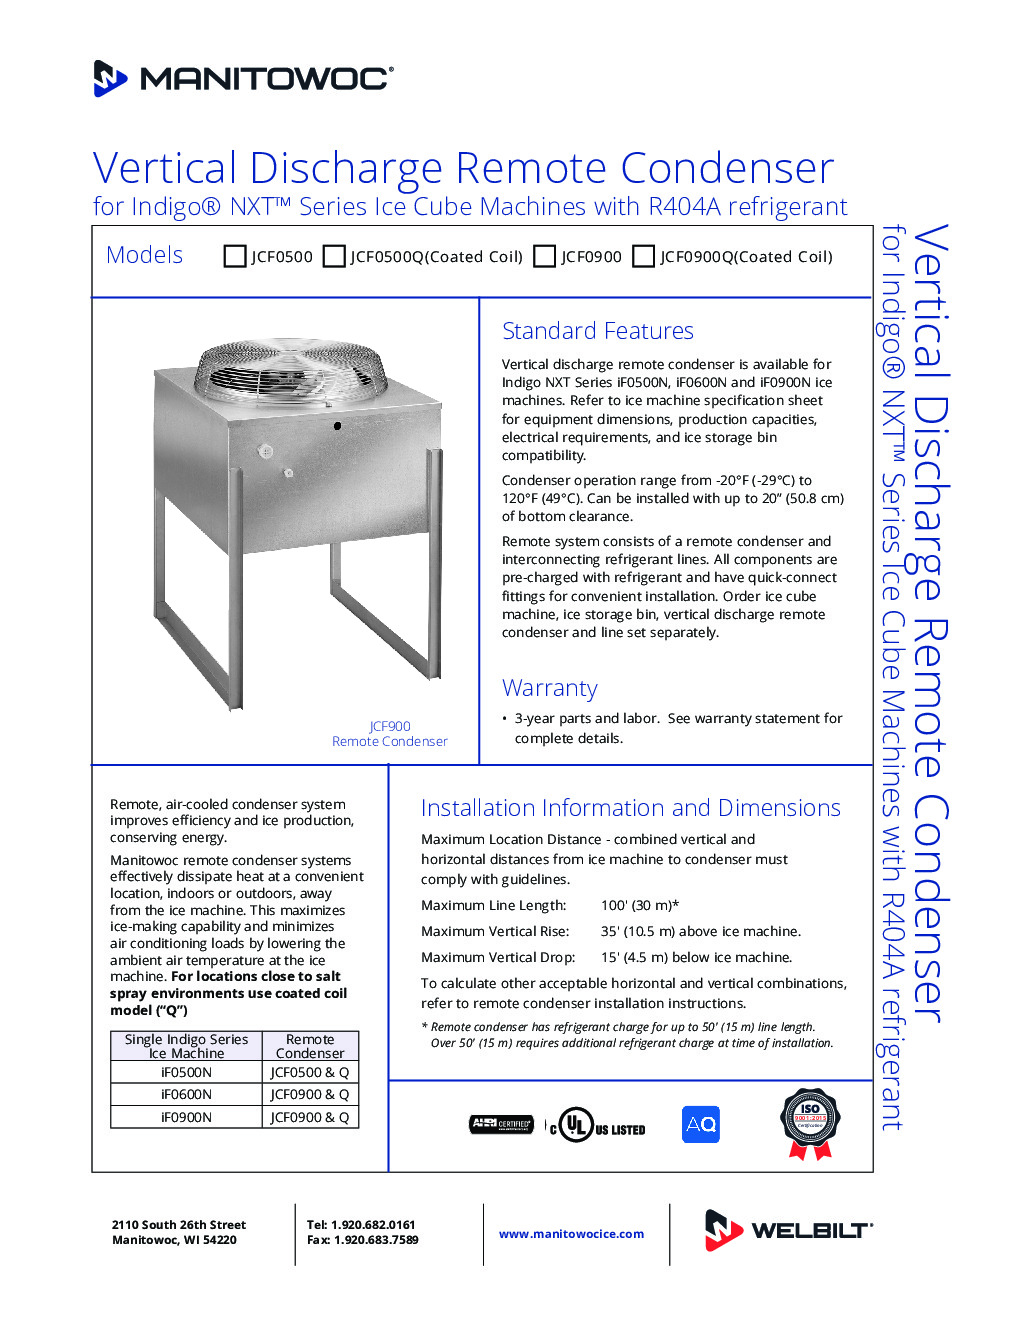 Manitowoc JCF0900-251 Remote Condenser Unit